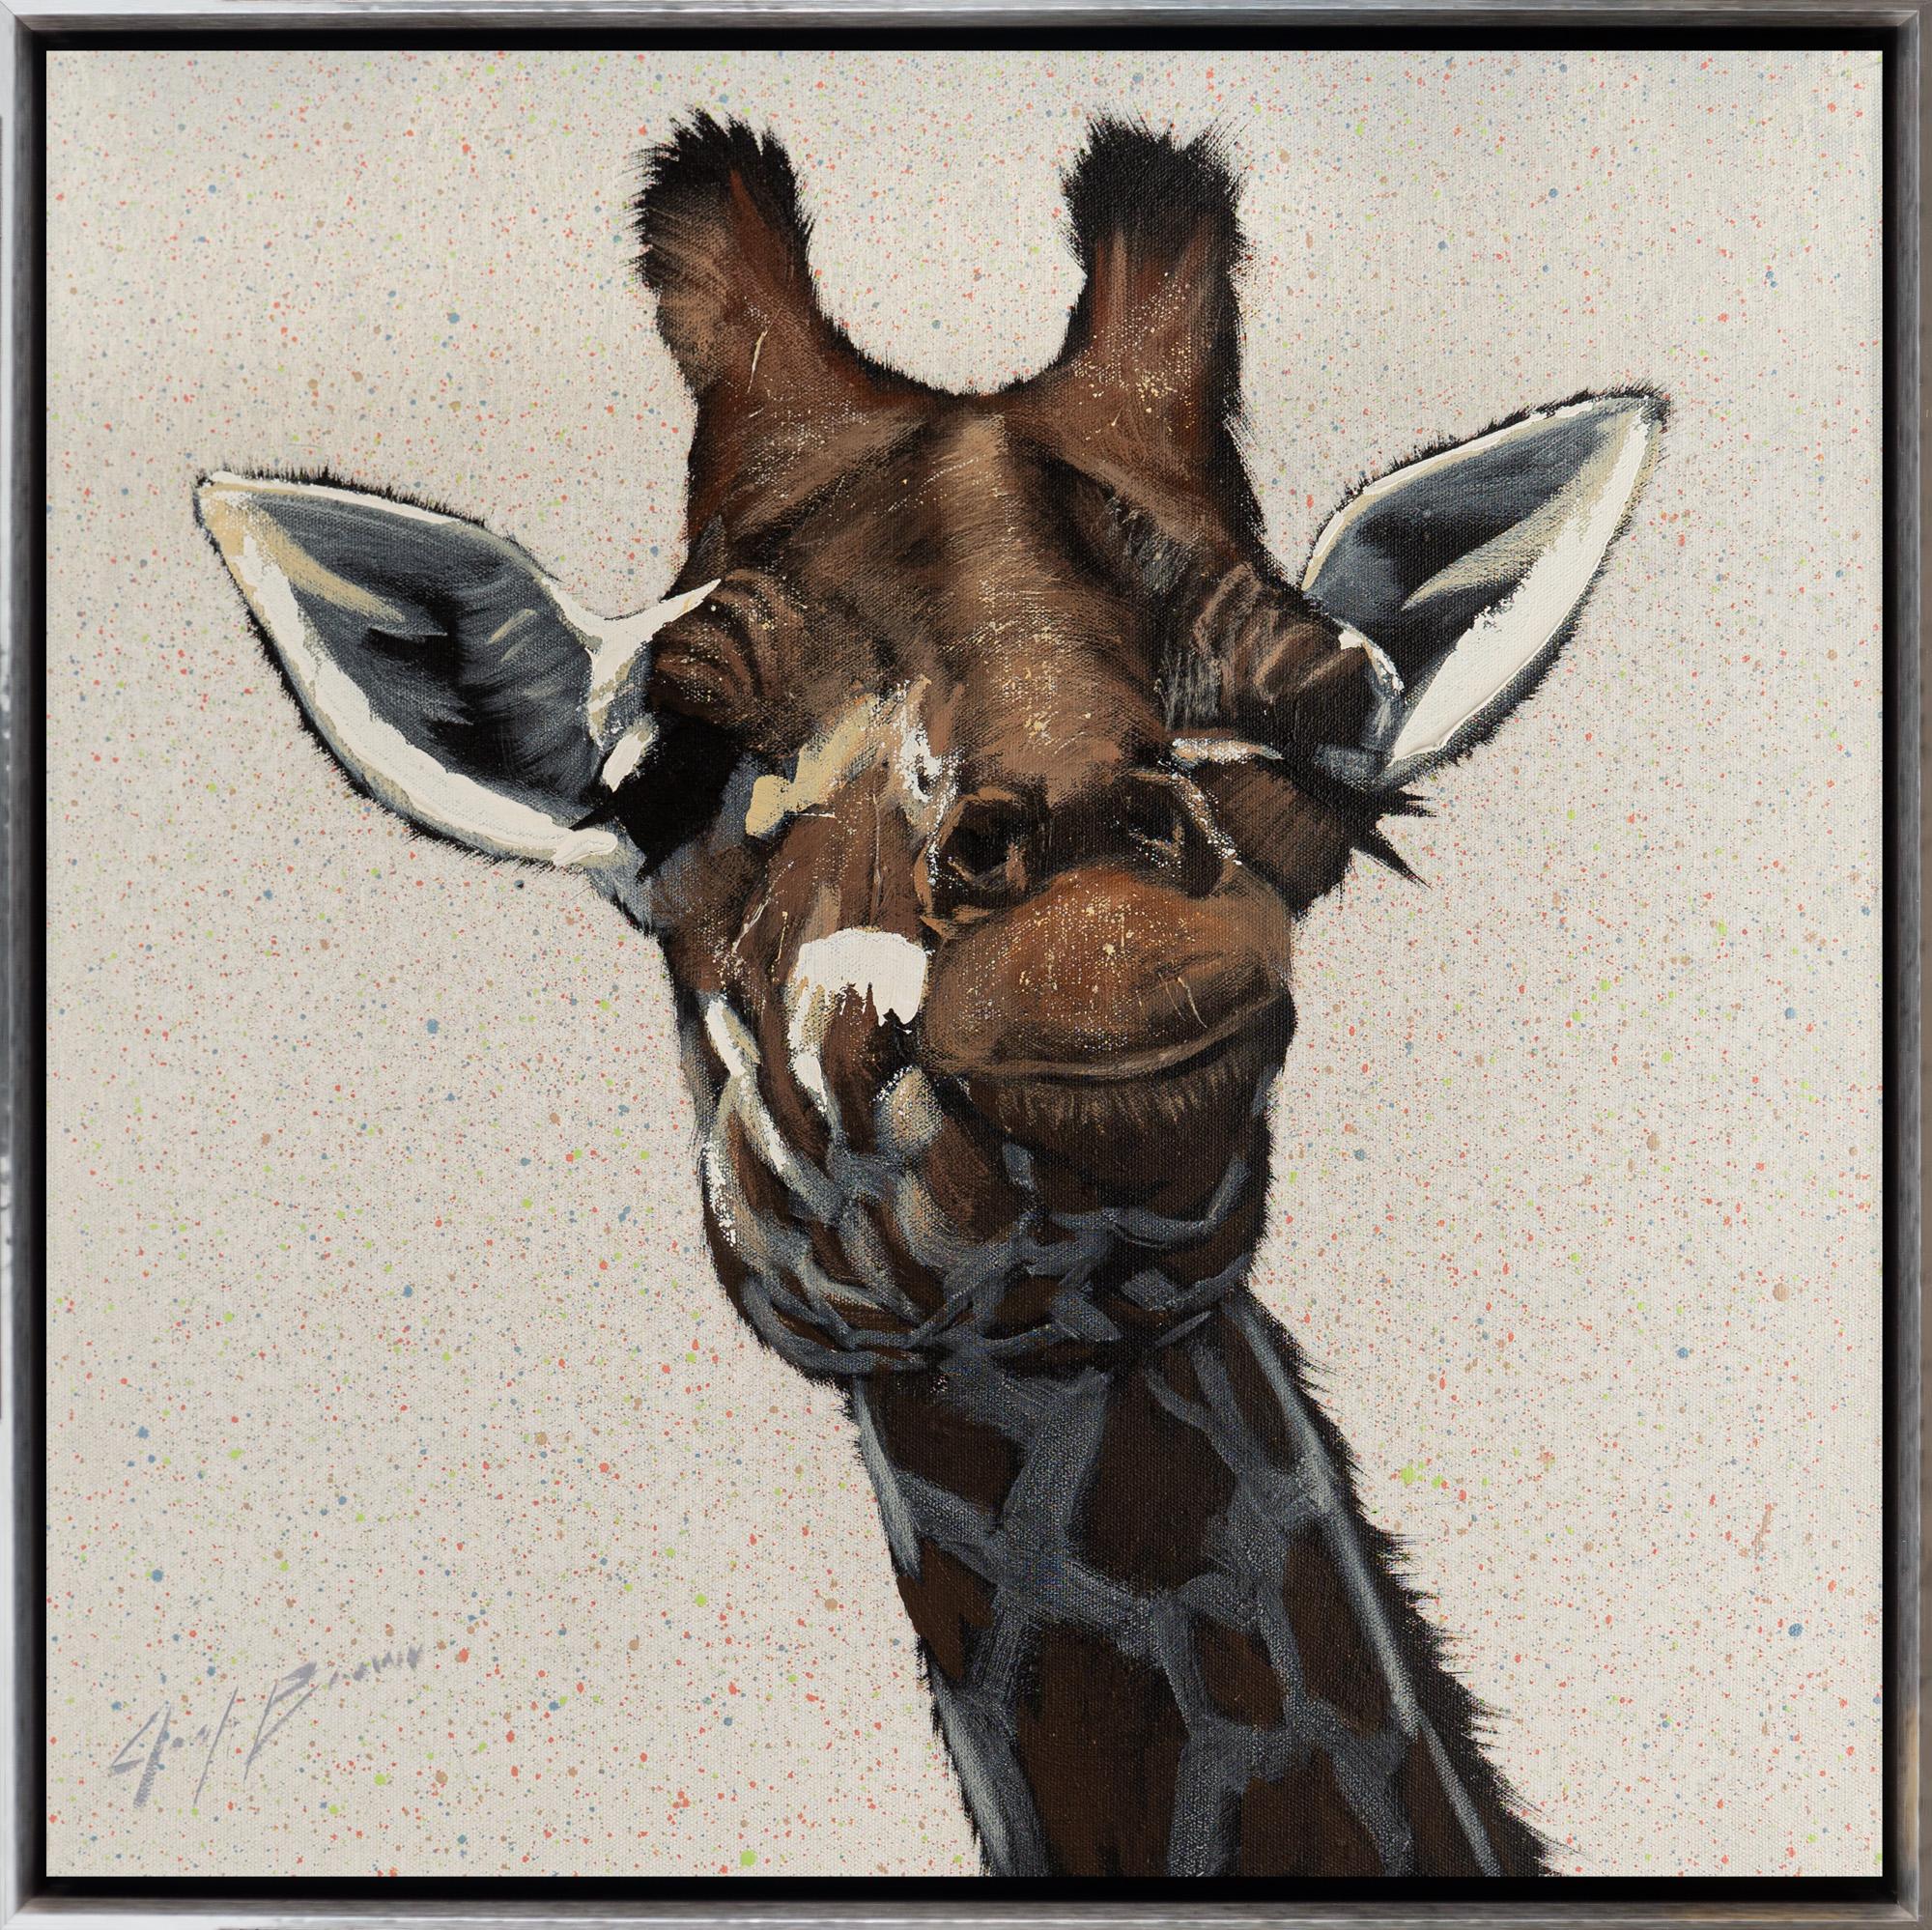 Joshua Brown Animal Painting - "Giraffe 5" Contemporary Animal Portrait Oil and Acrylic on Canvas Painting